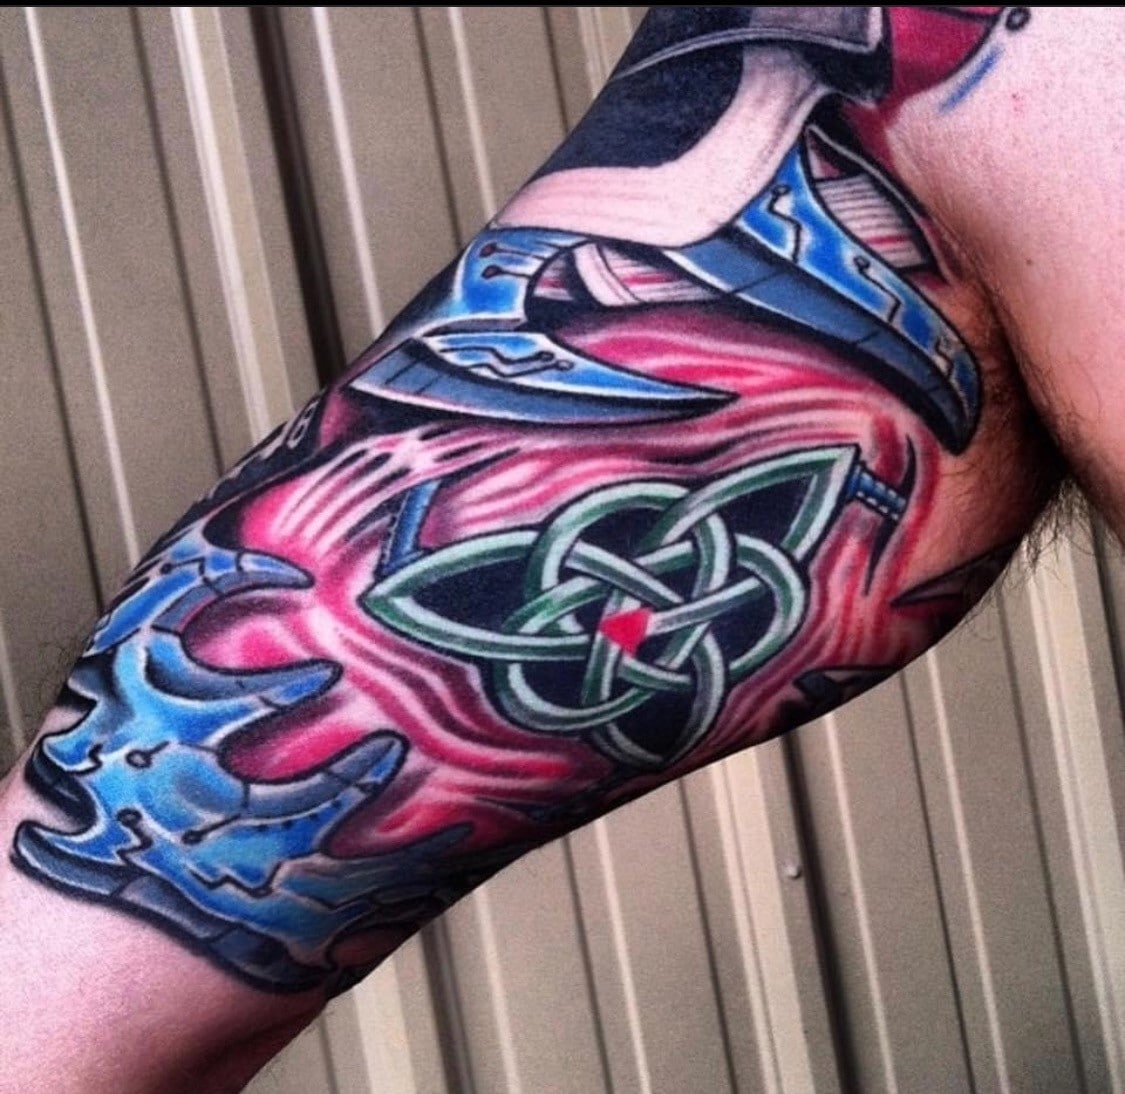 colorful arm tattoo artwork - Las Vegas - Trip Ink Tattoo